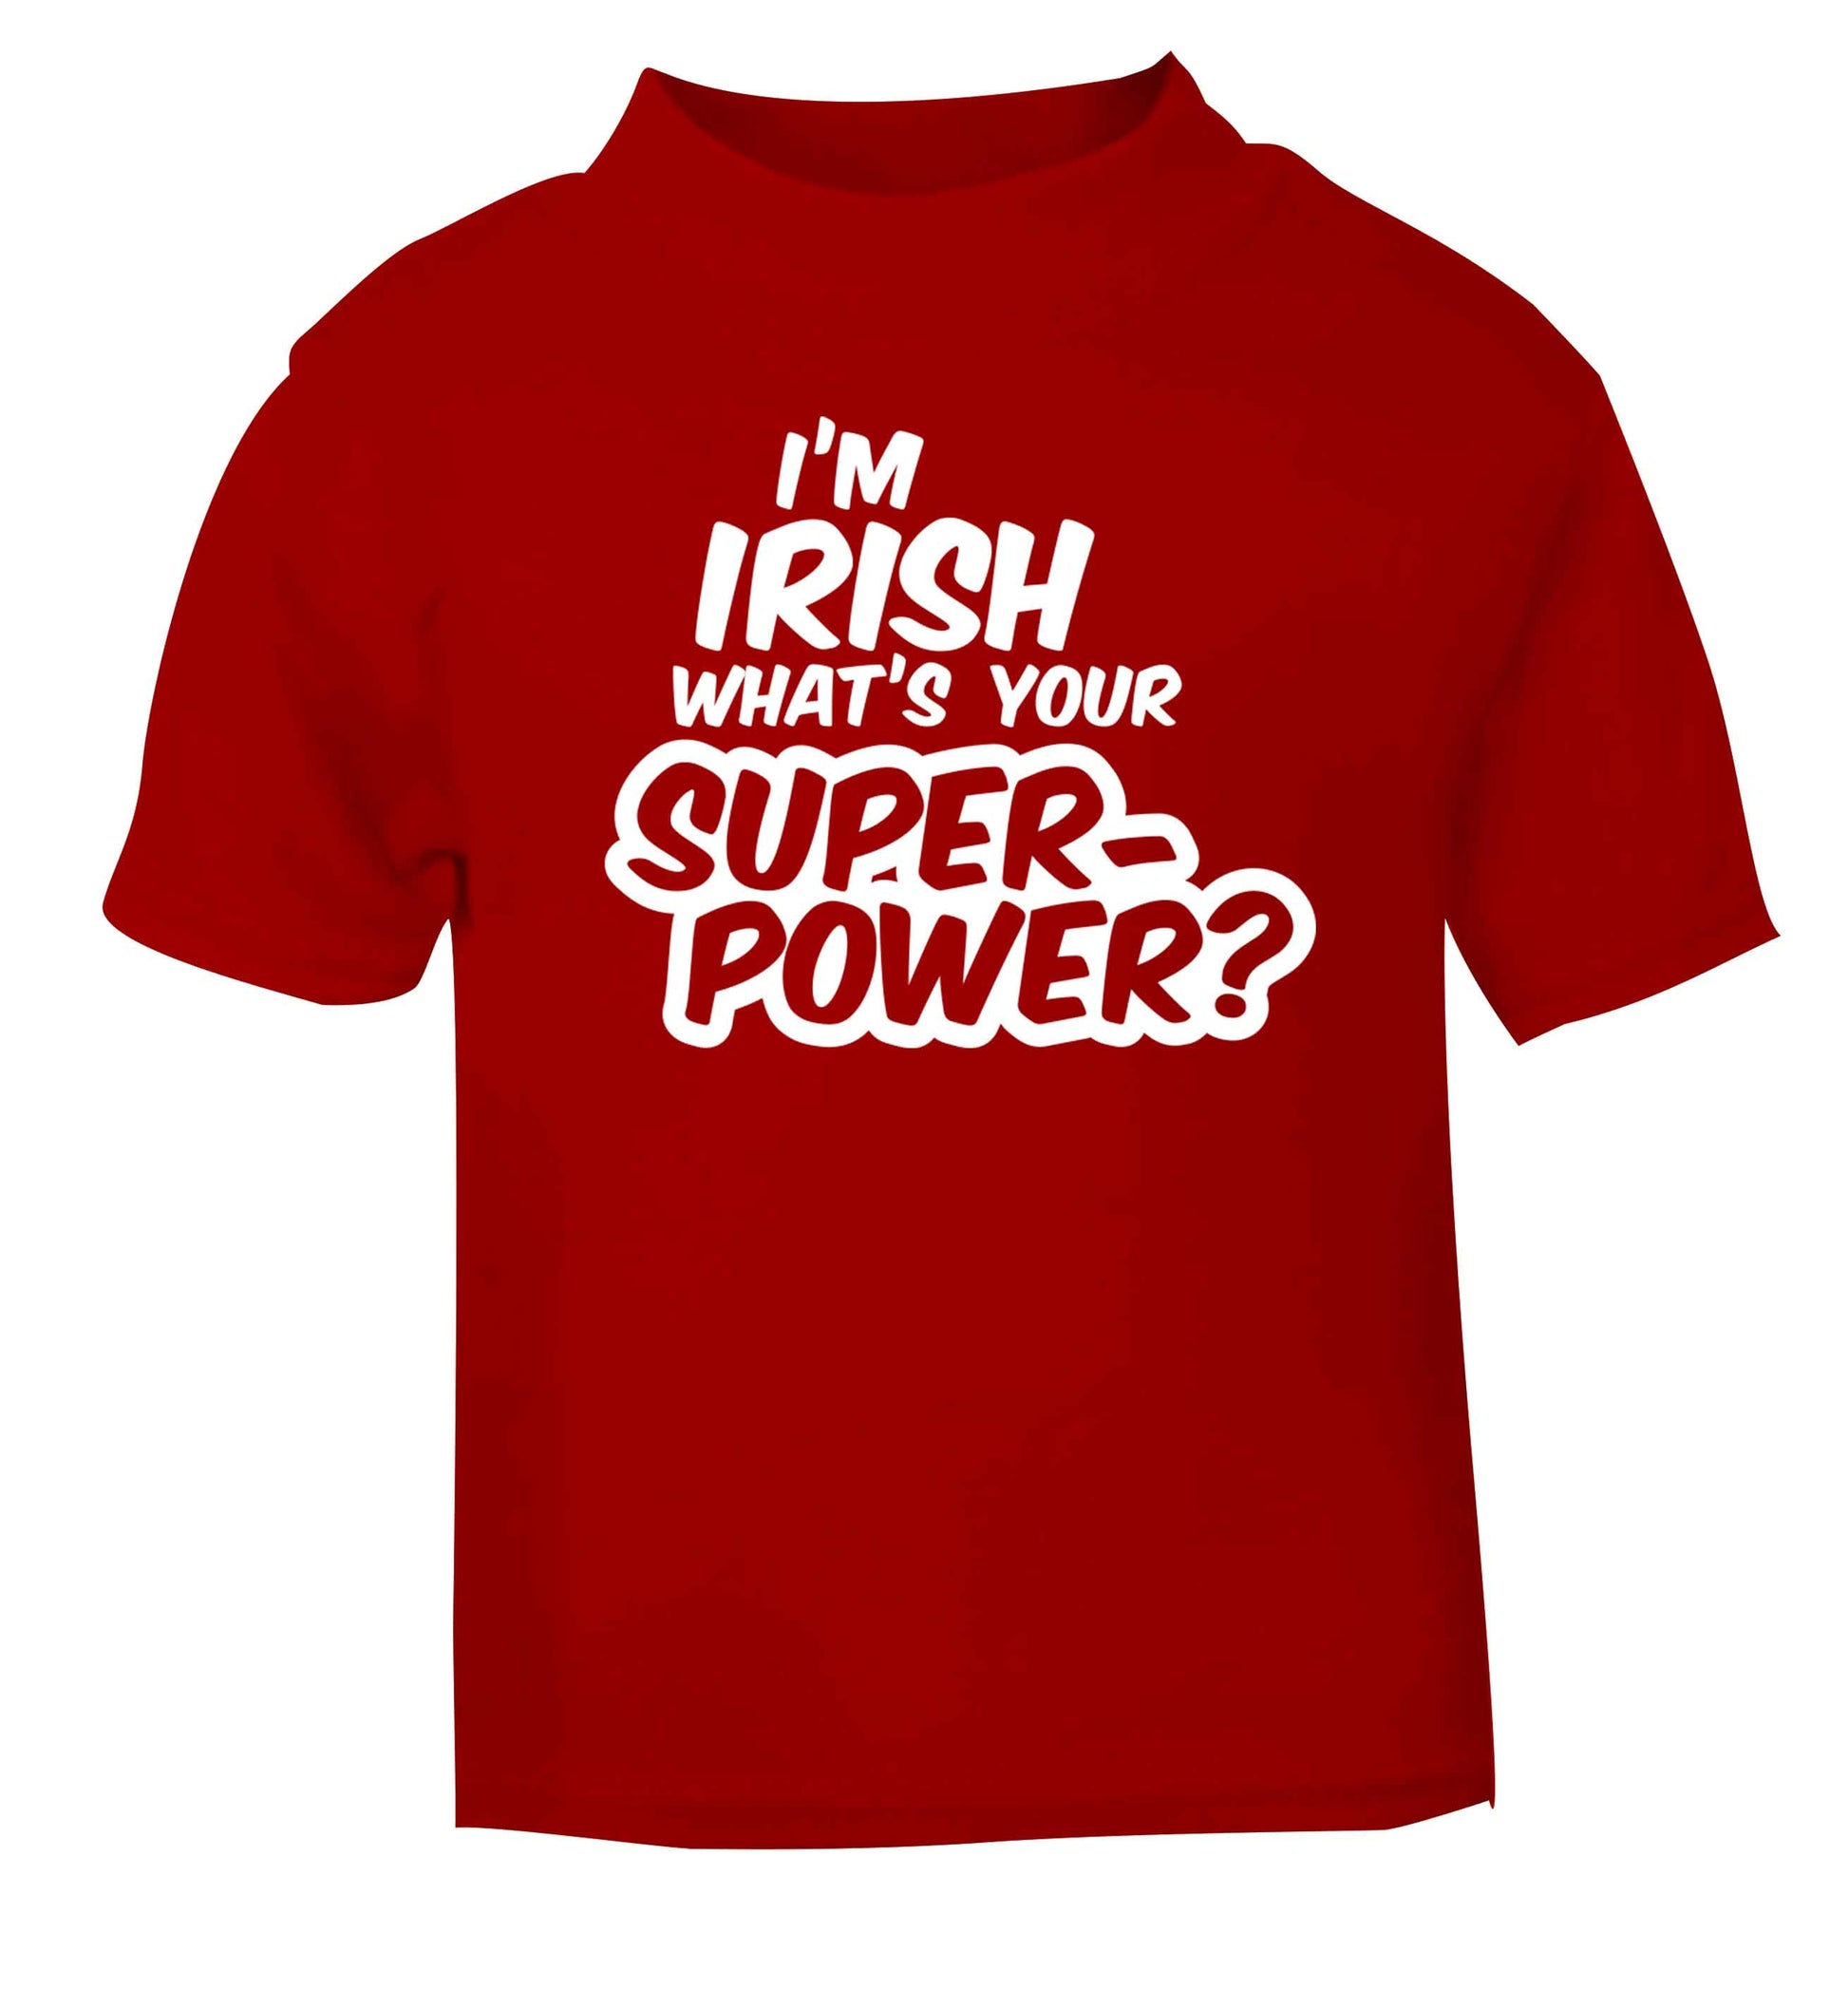 I'm Irish what's your superpower? red baby toddler Tshirt 2 Years